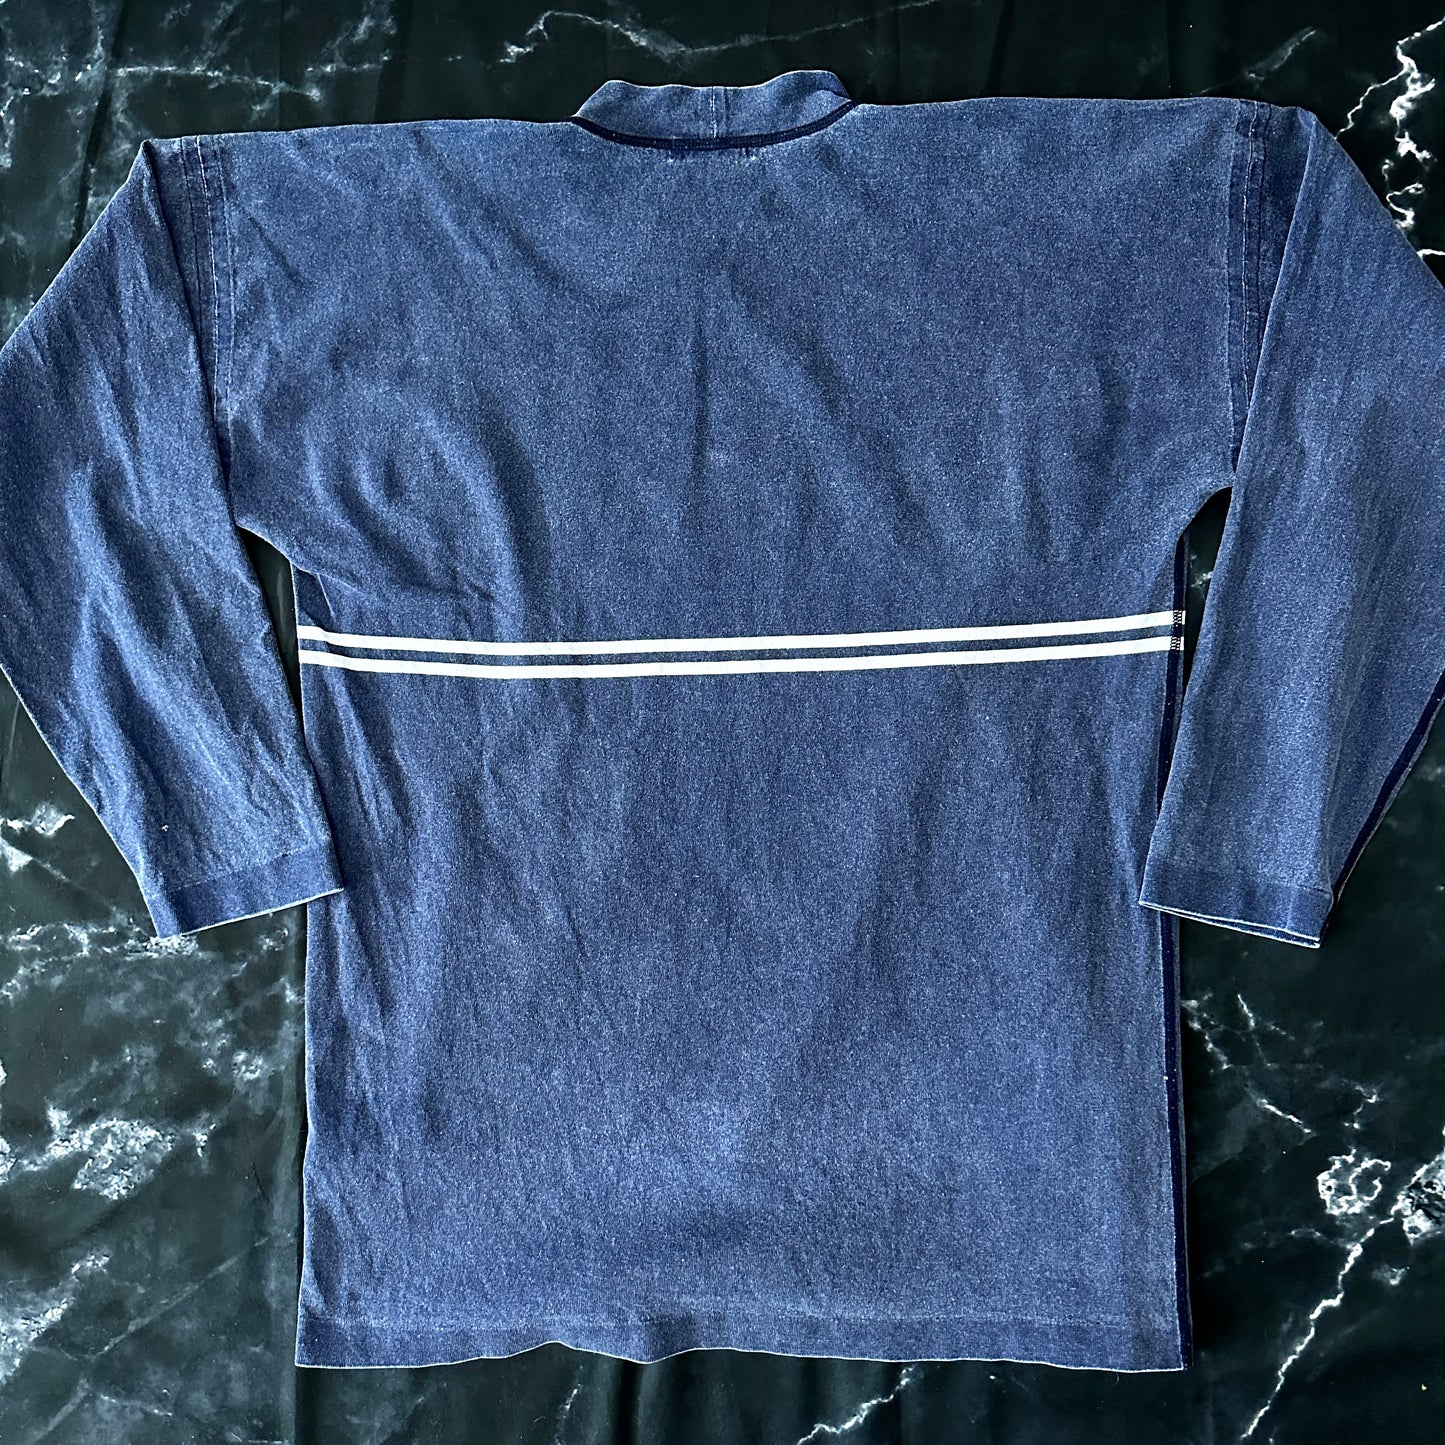 Stone Island Vintage 80s Japan Longsleeve Shirt - XL - Made in Italy